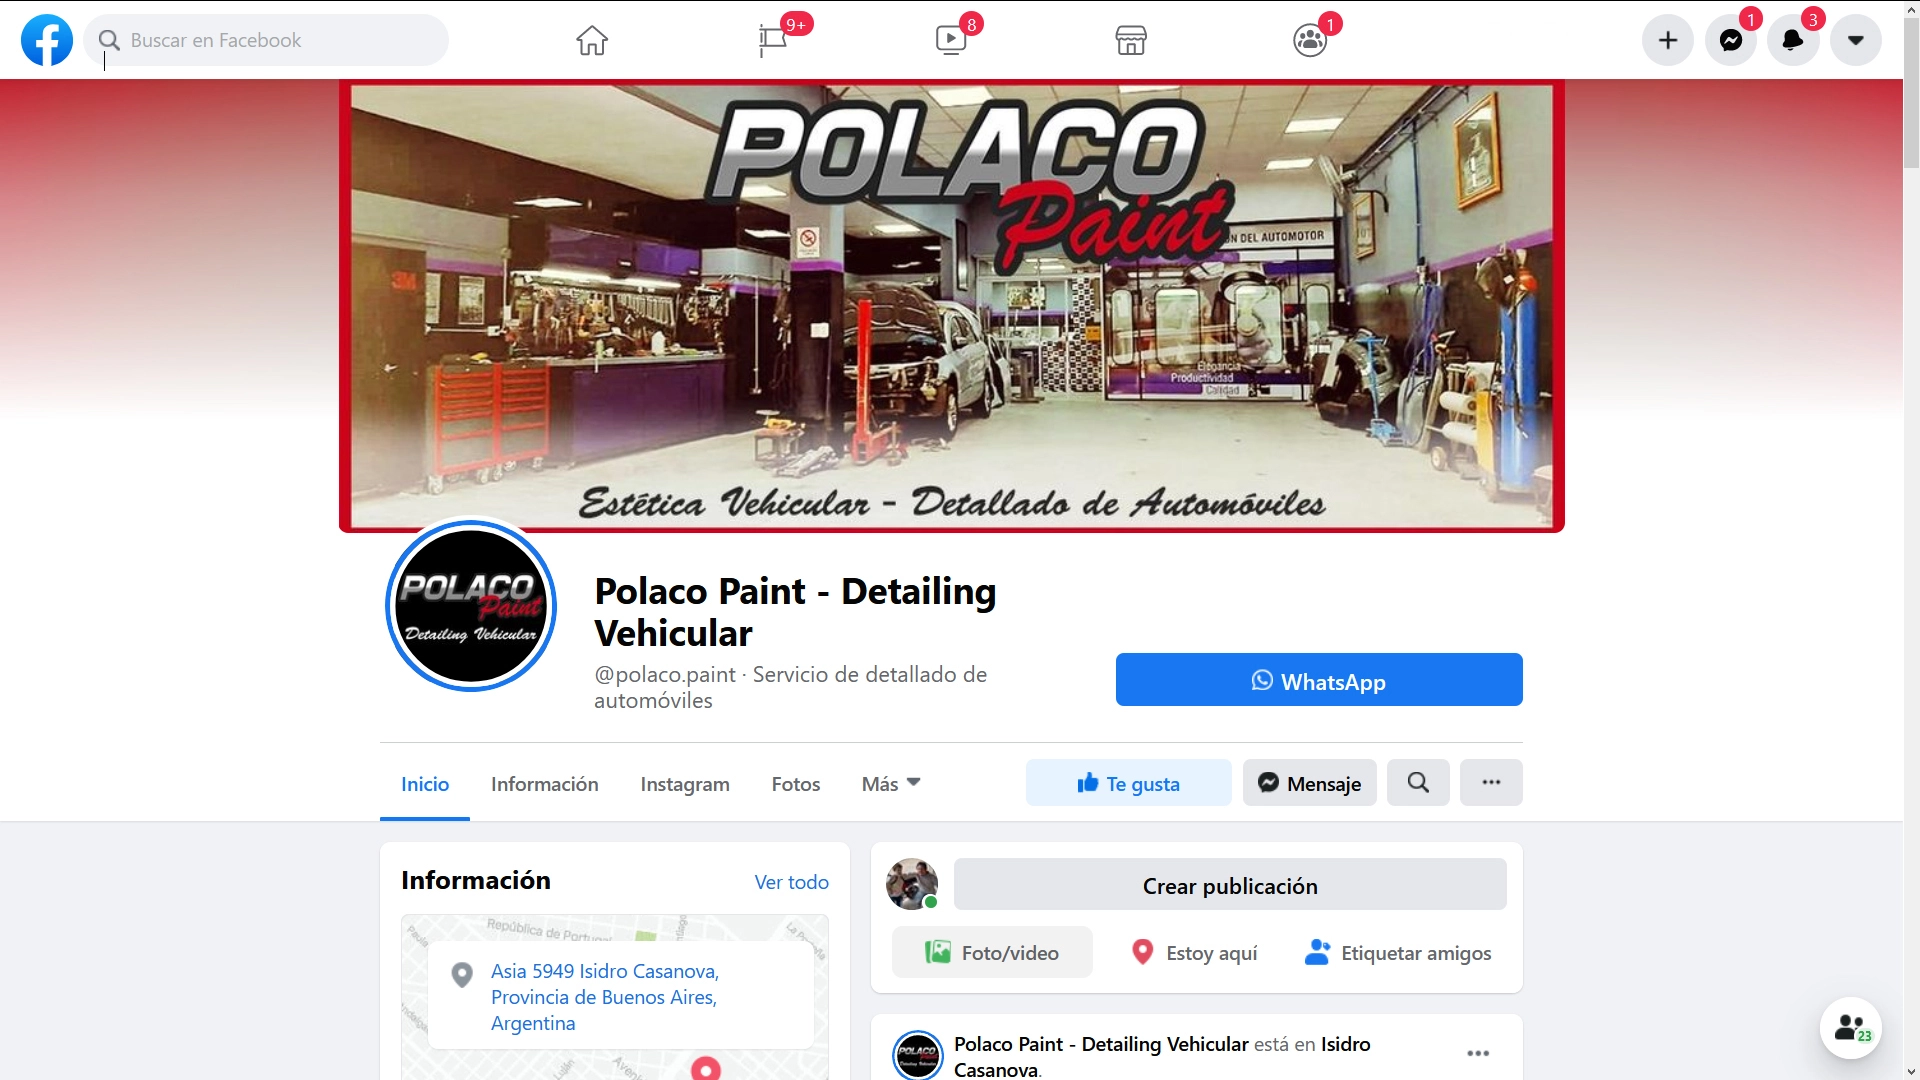 POLACO PAINT | Detailing Vehicular - Facebook